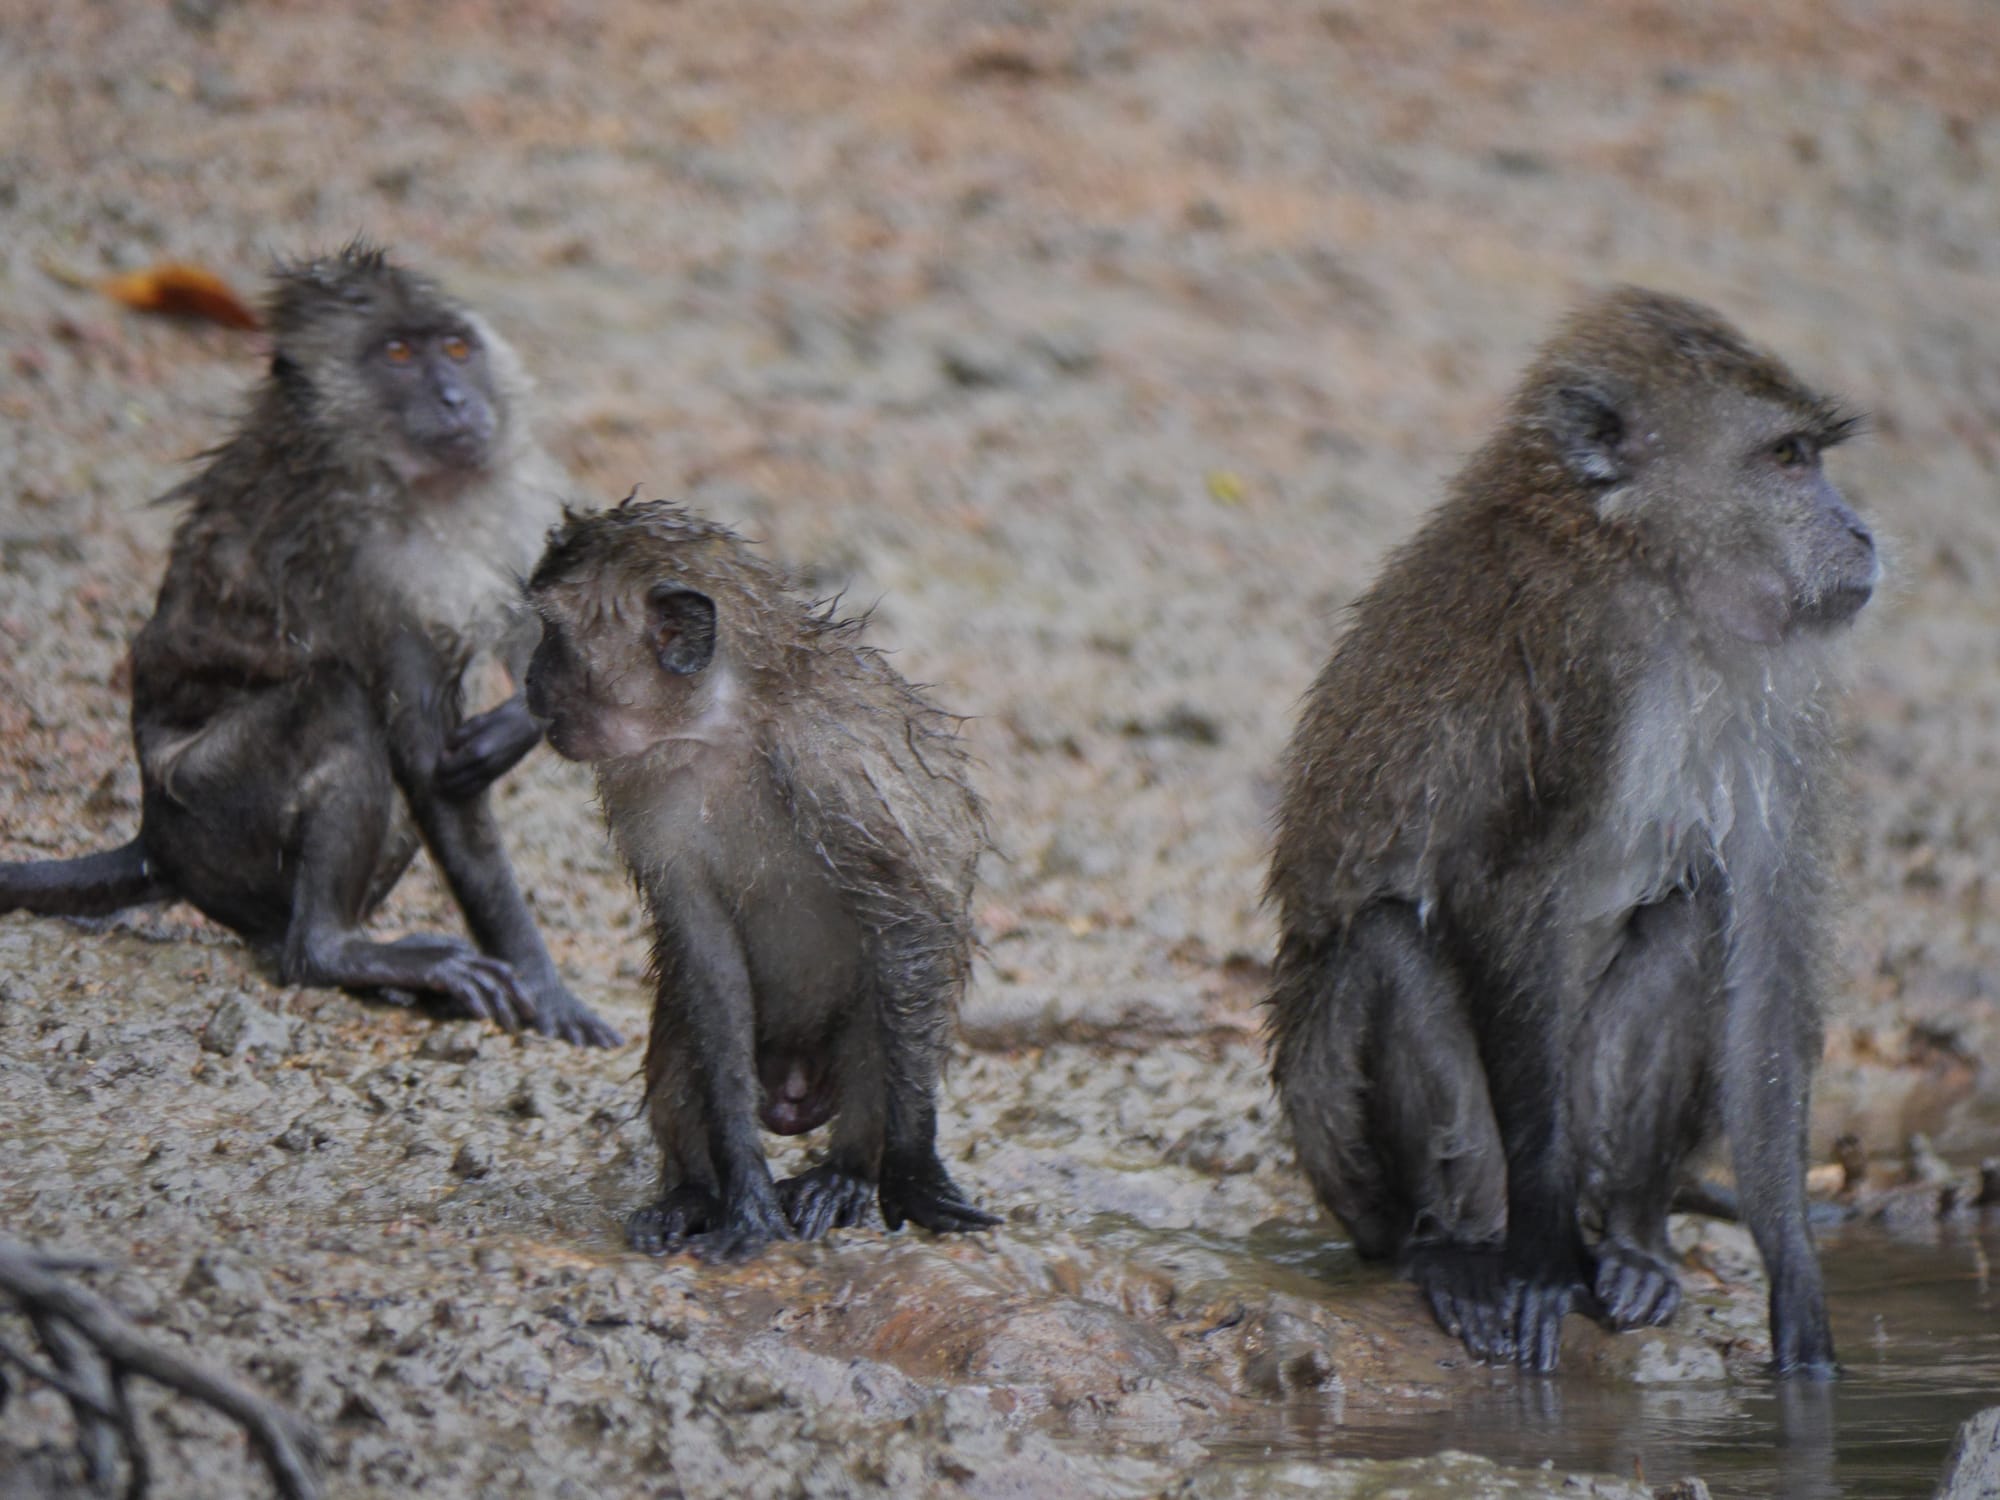 Photo by Author — wet monkeys in the swamp — Tg Rhu Mangrove Tour, Langkawi, Malaysia